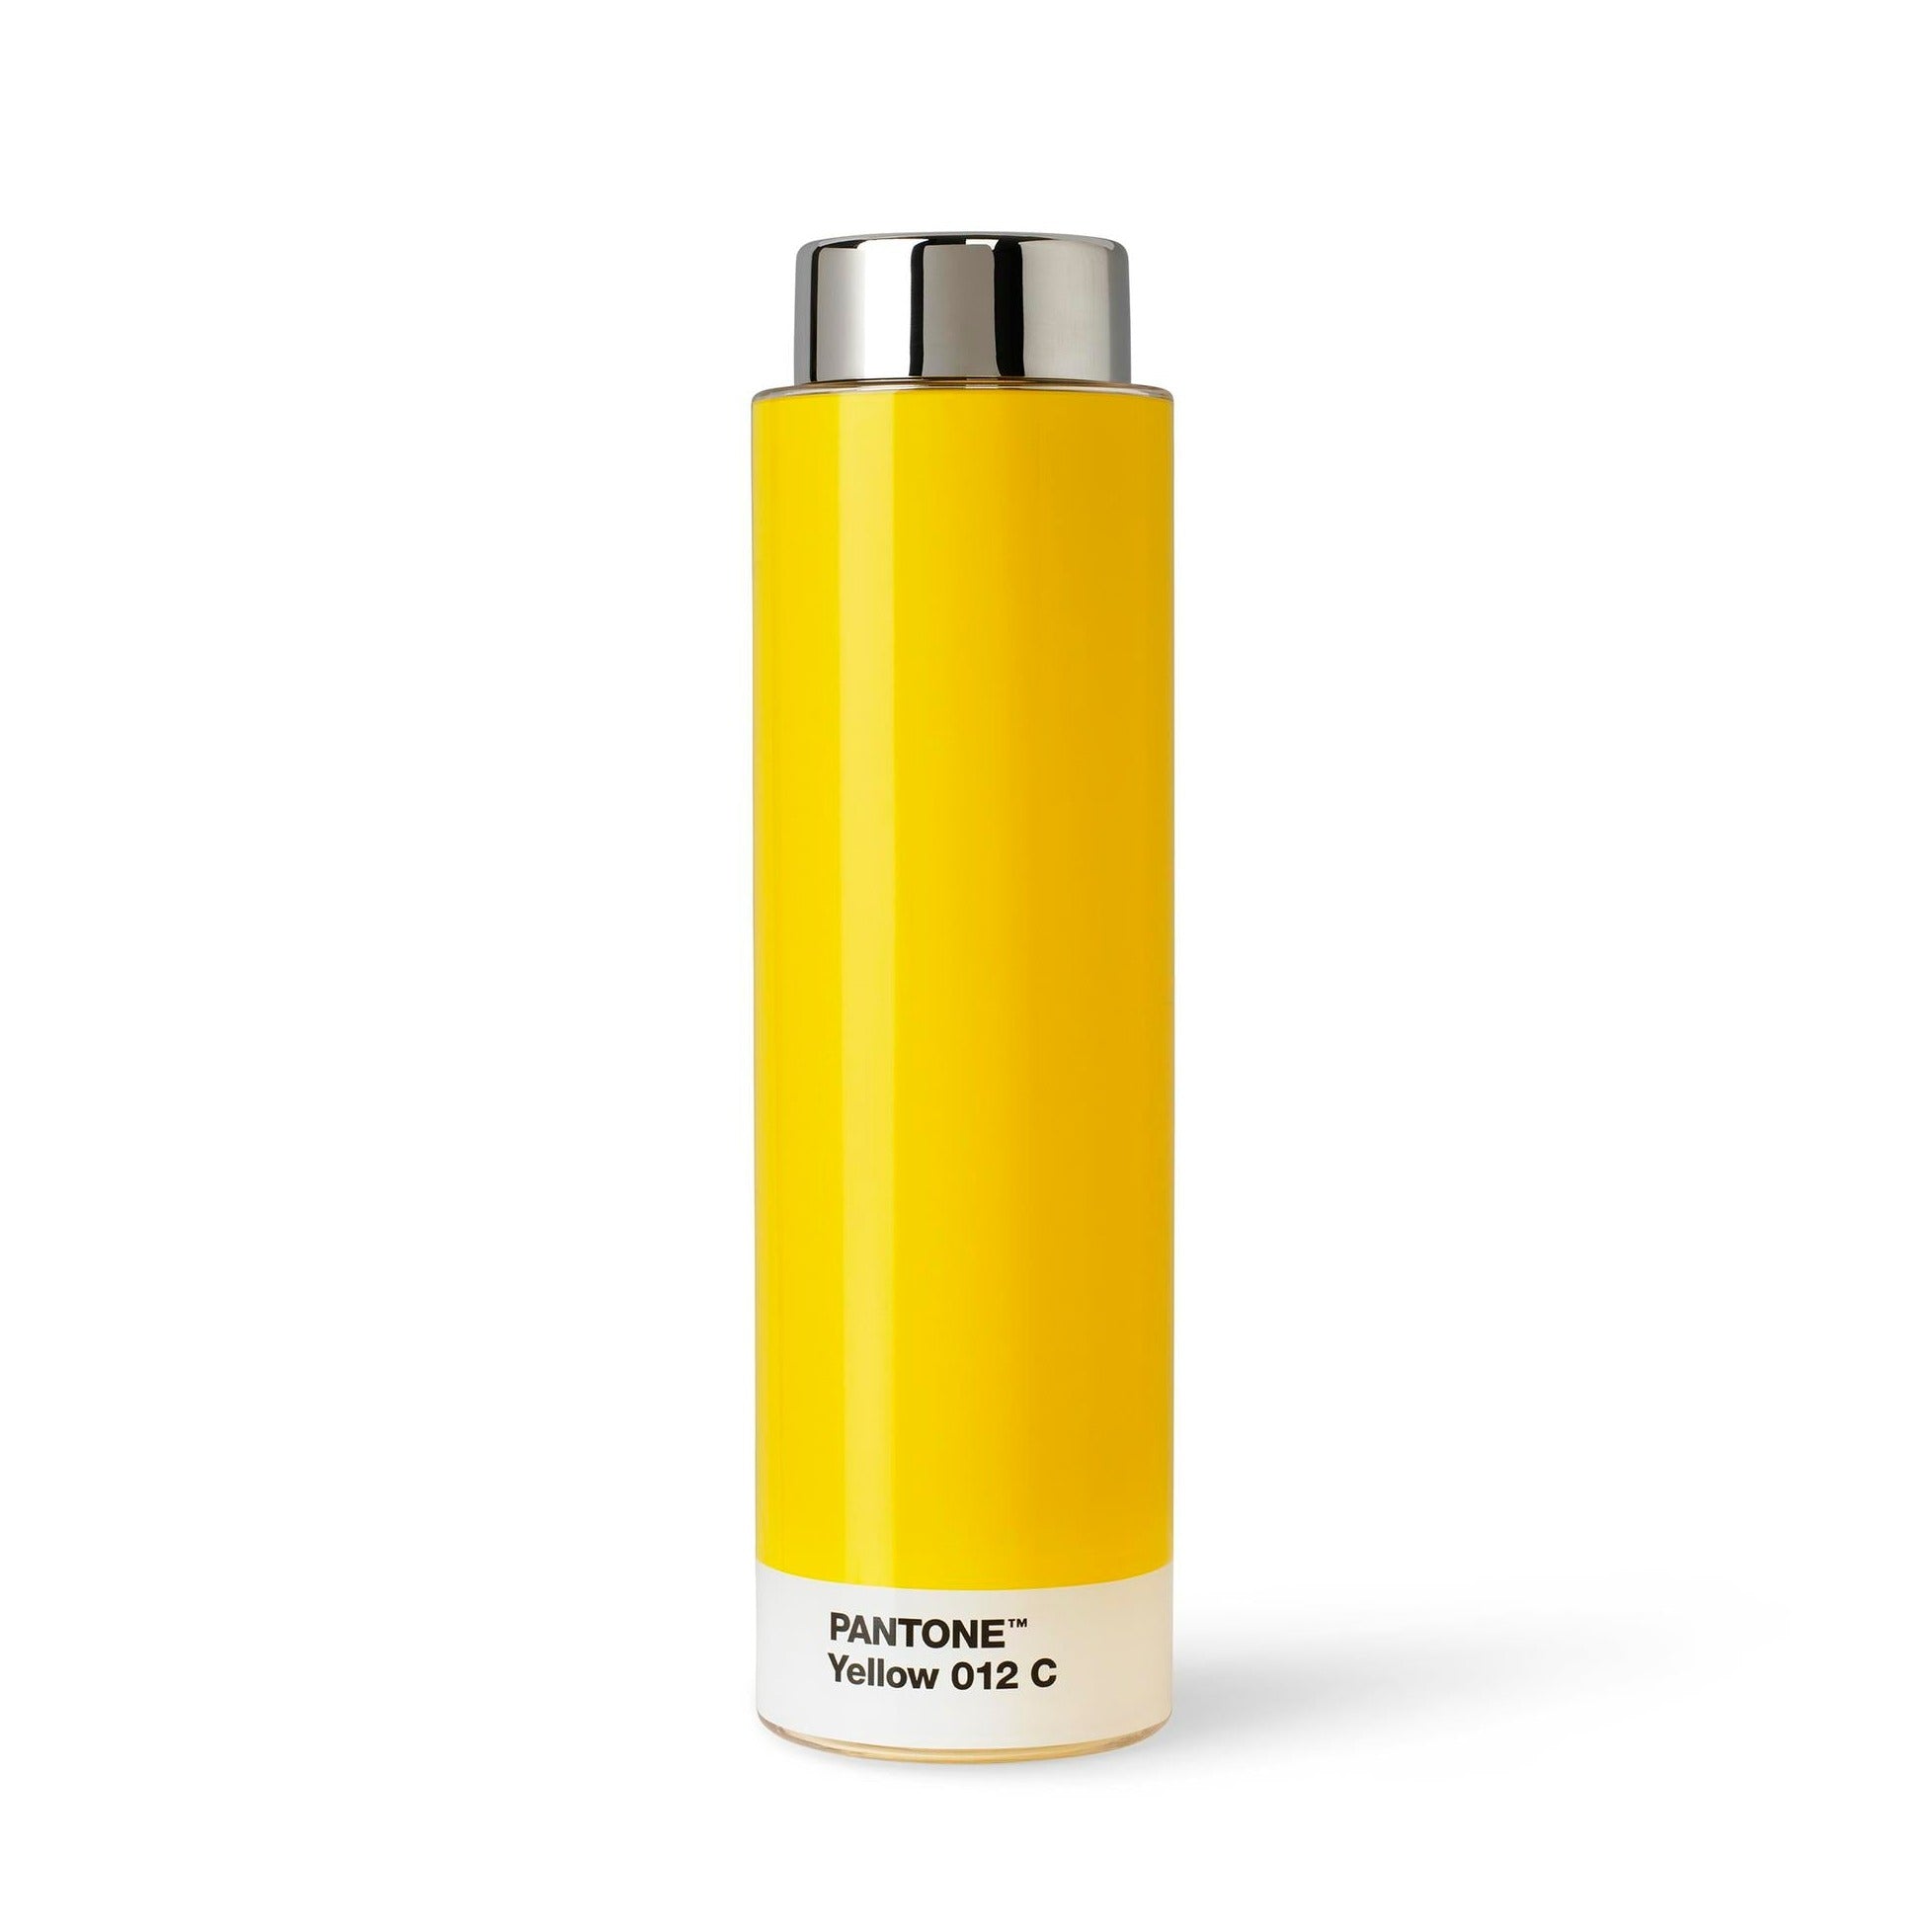 Pantone Tritan Drinking Bottle - Yellow 012